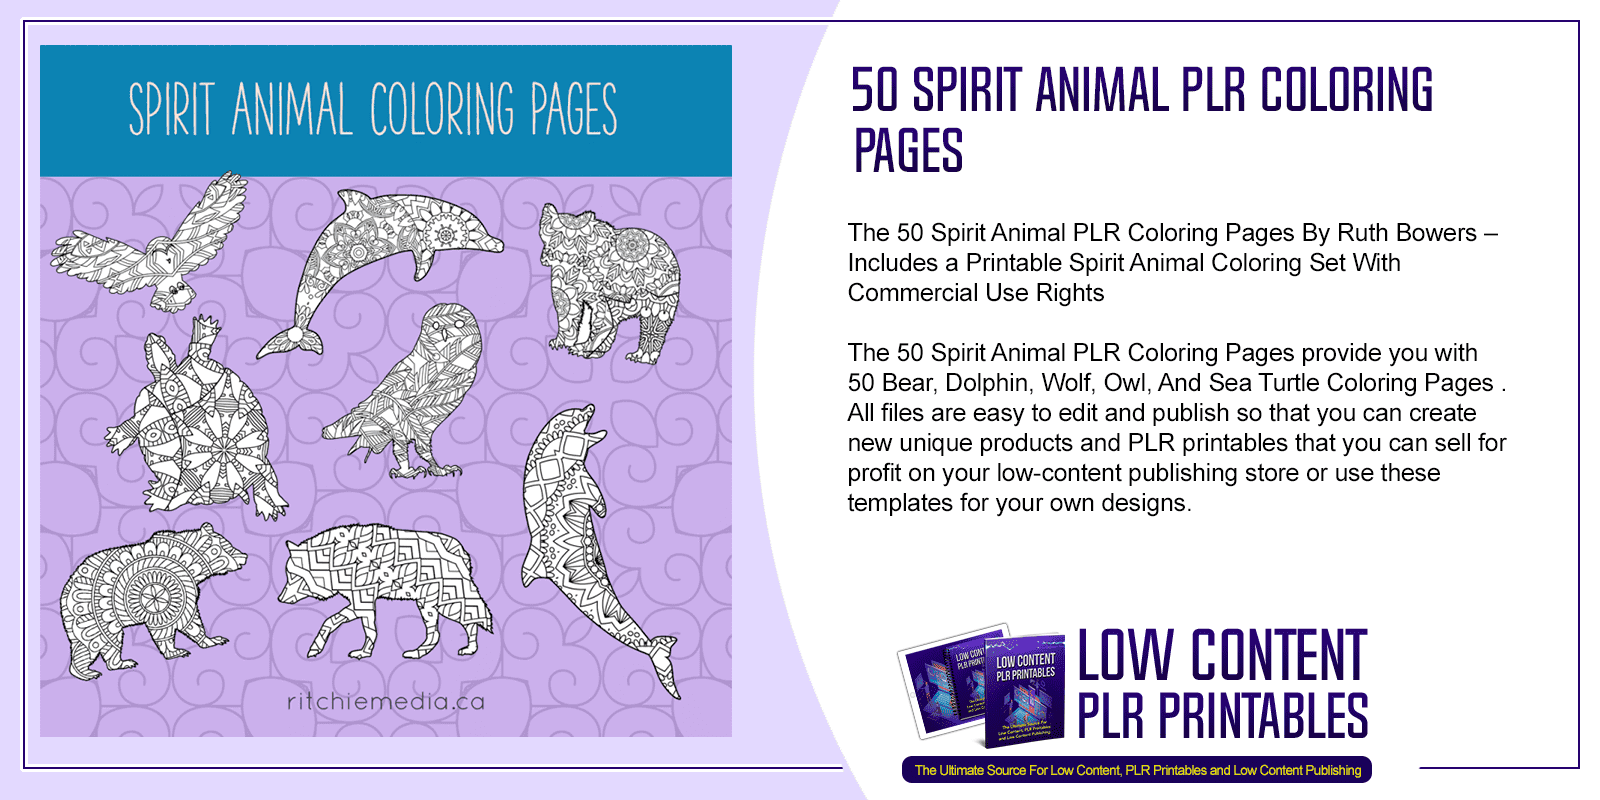 50 Spirit Animal PLR Coloring Pages